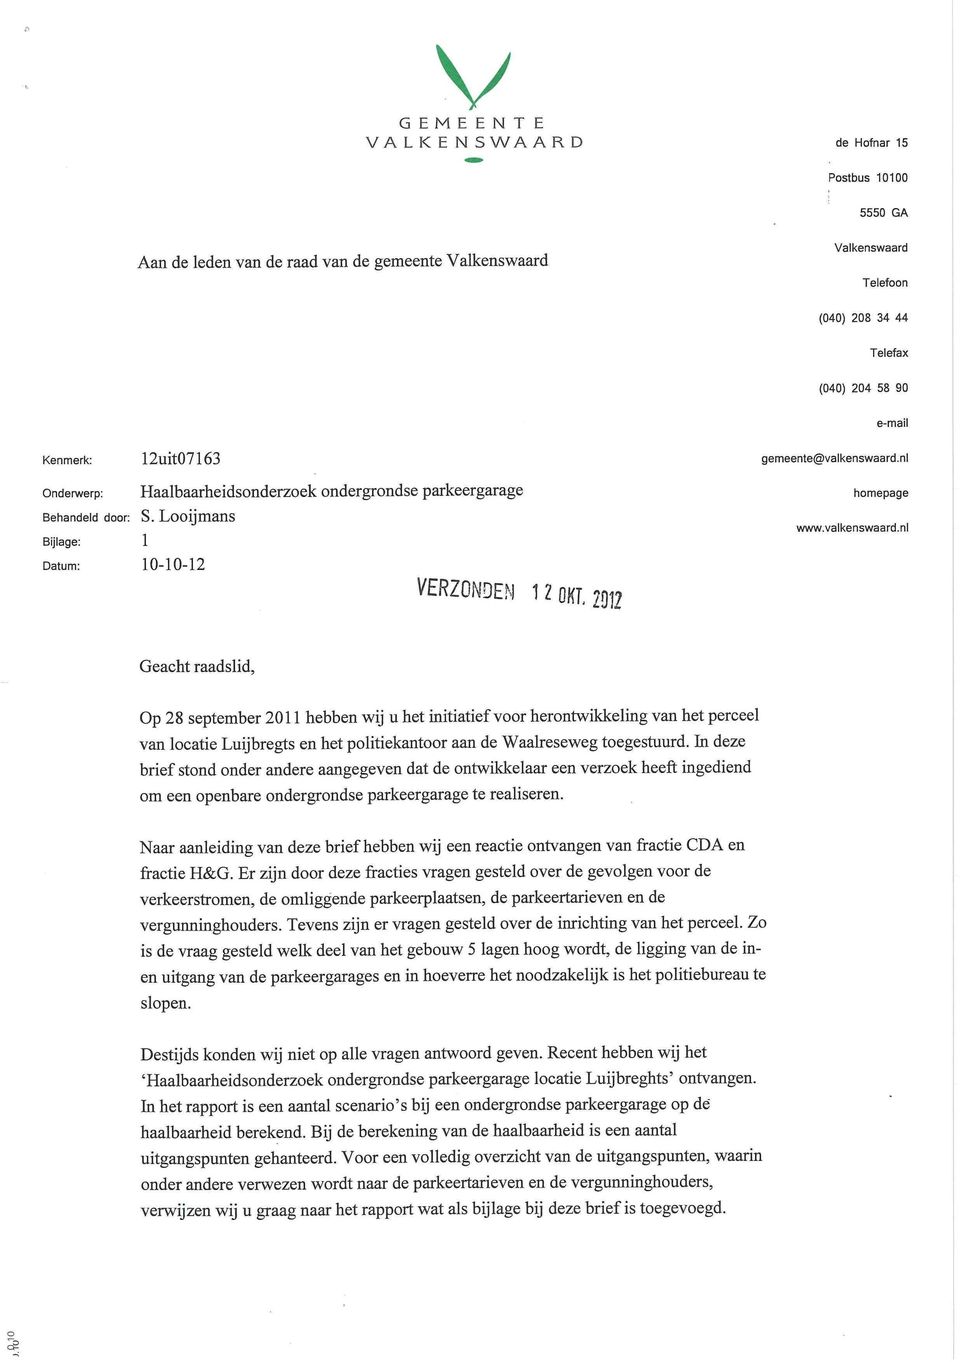 nl hmepage Behandeld dr: Bijlage: 1 S. Lijmans www.valkenswaard.